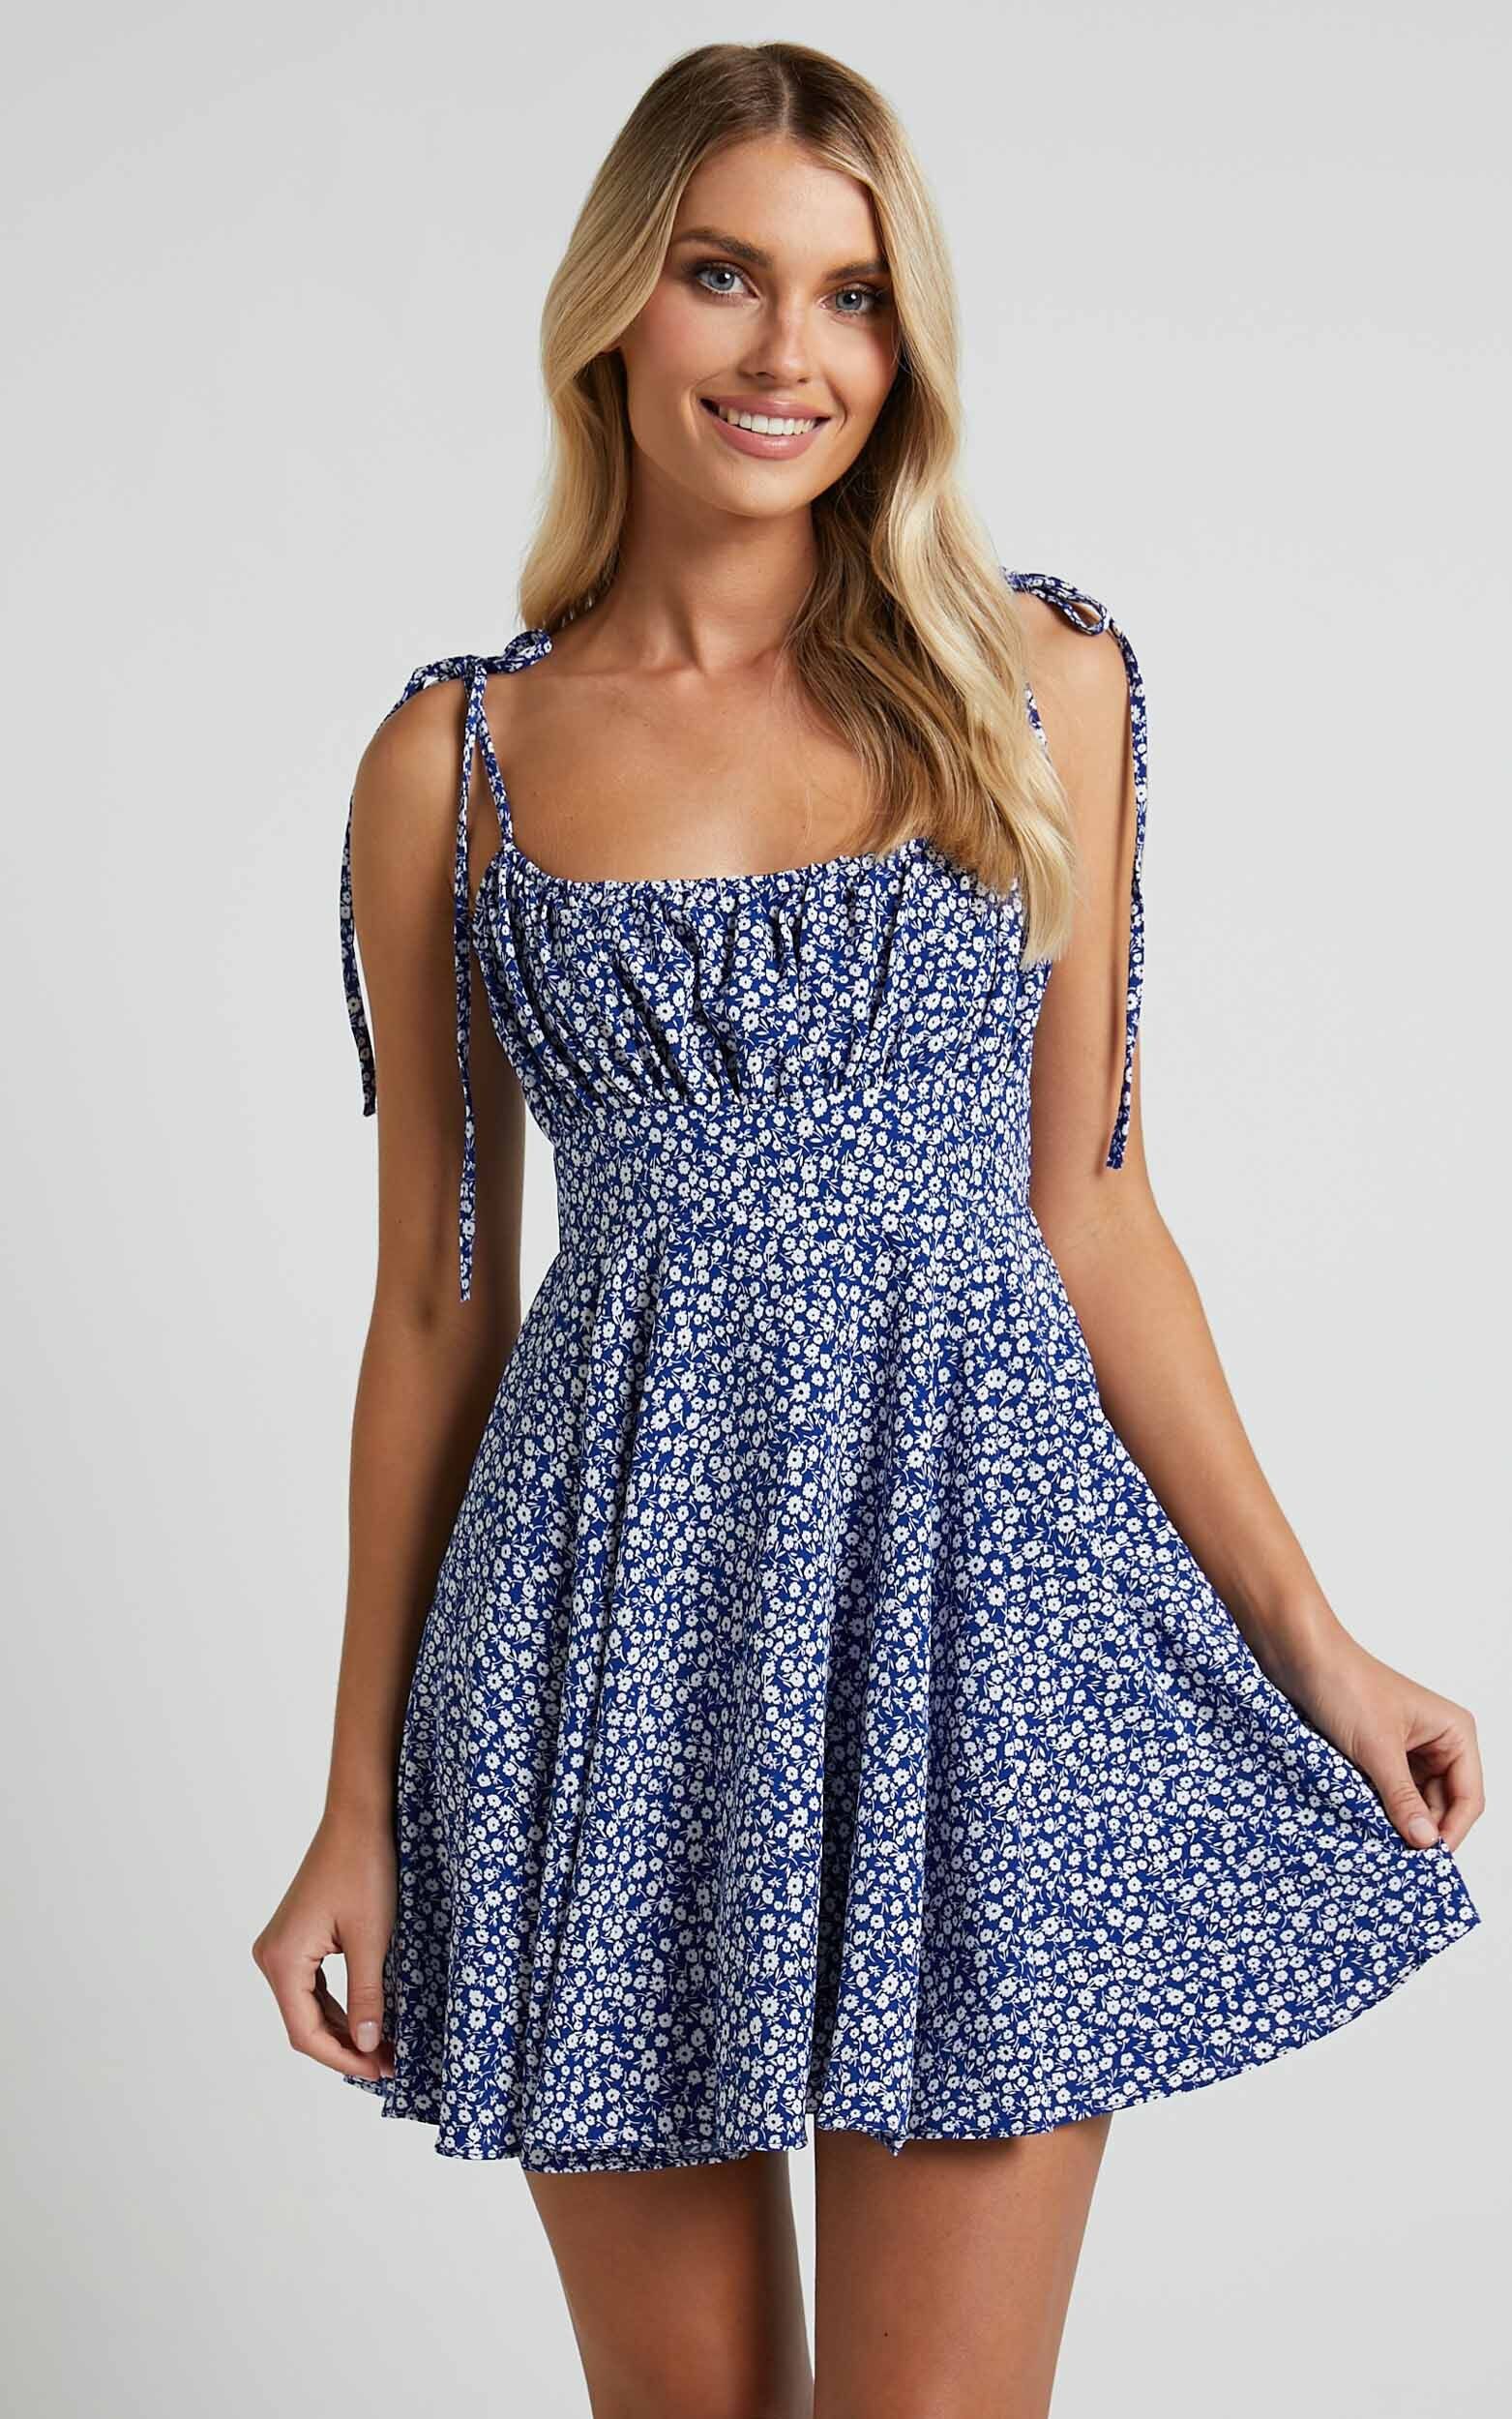 Summer Jam Mini Dress - Strappy Slip Dress in Blue Floral - 04, BLU1